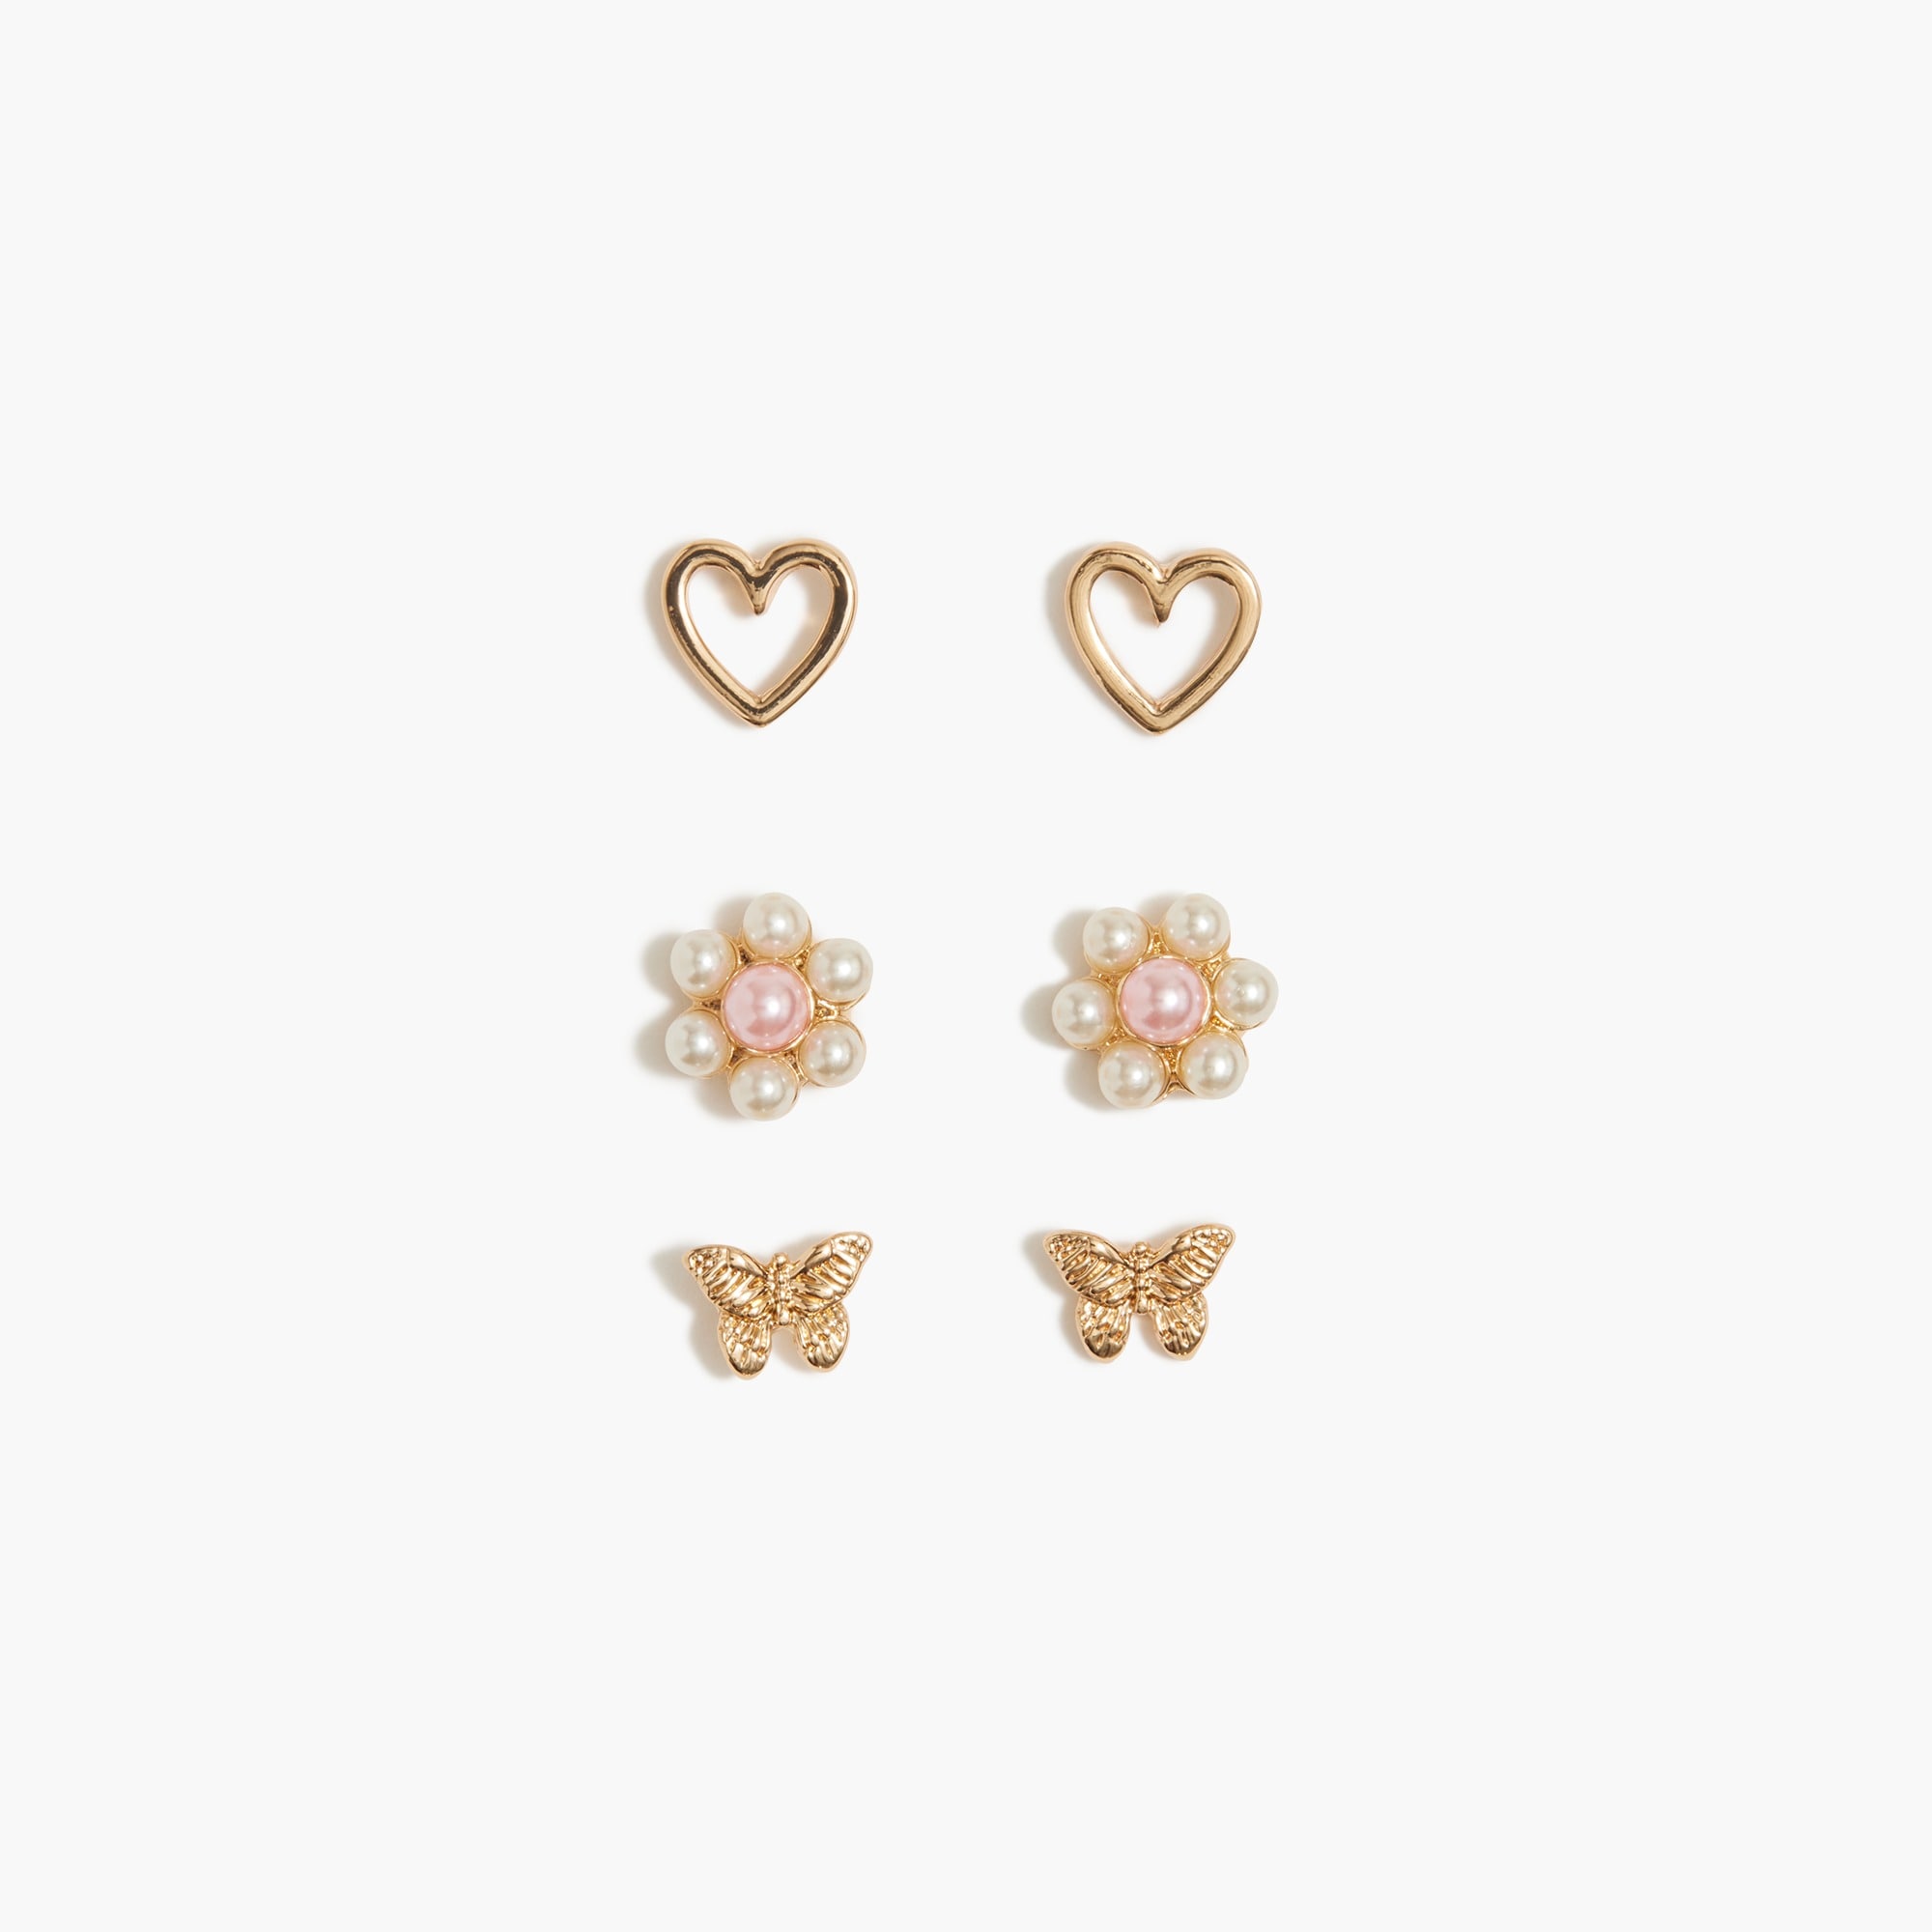  Girls&apos; heart earrings set